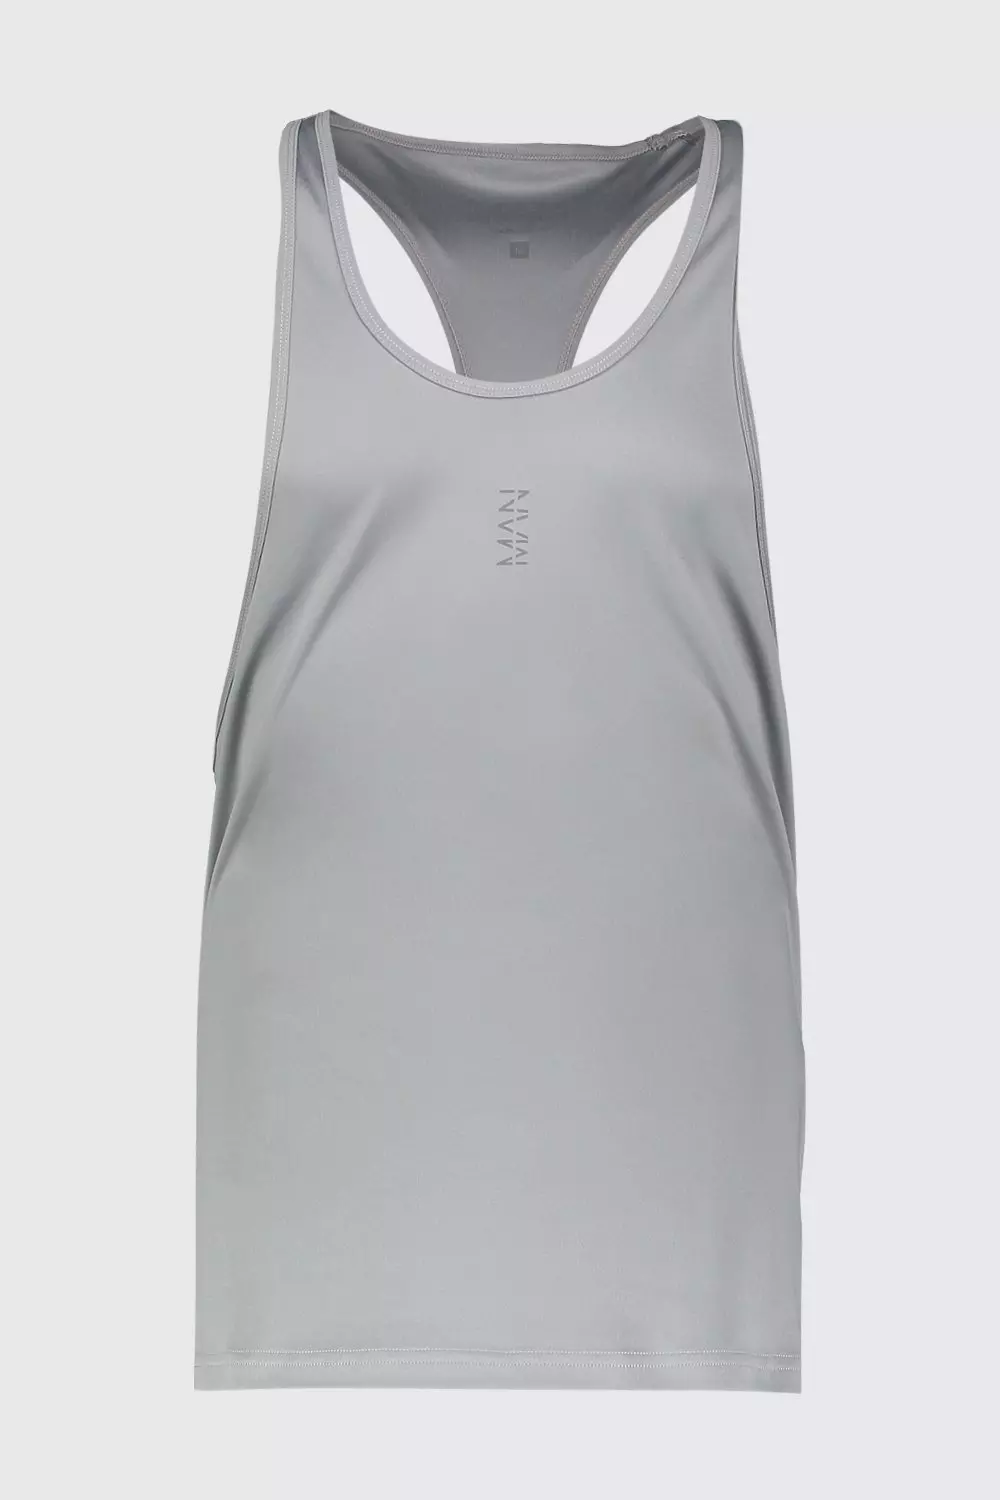 Buy Men Polyester Slim-Fit Gym Tank Top - White Online